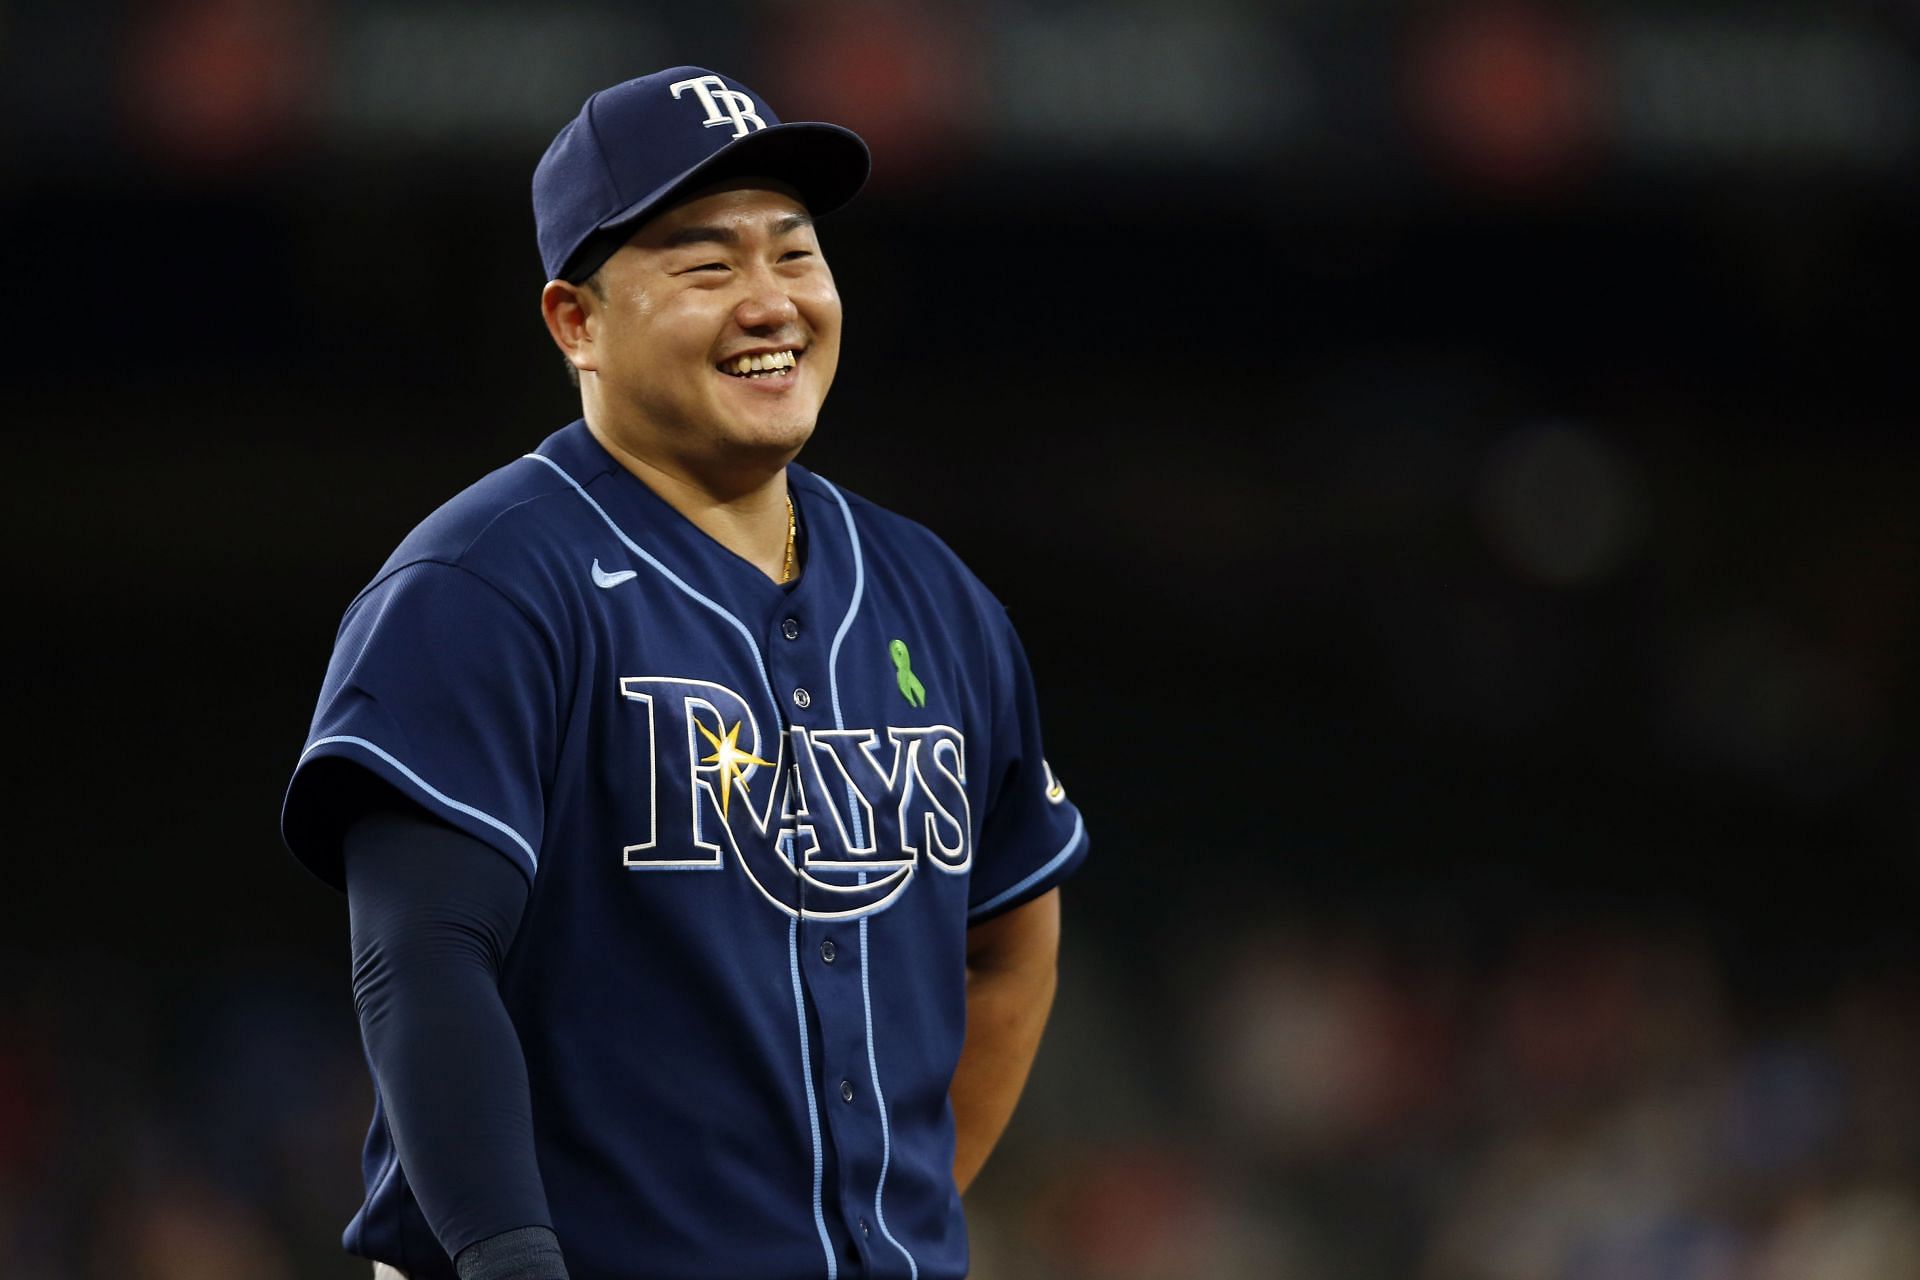 Folk hero. First baseman. Rays fans fall for Ji-Man Choi